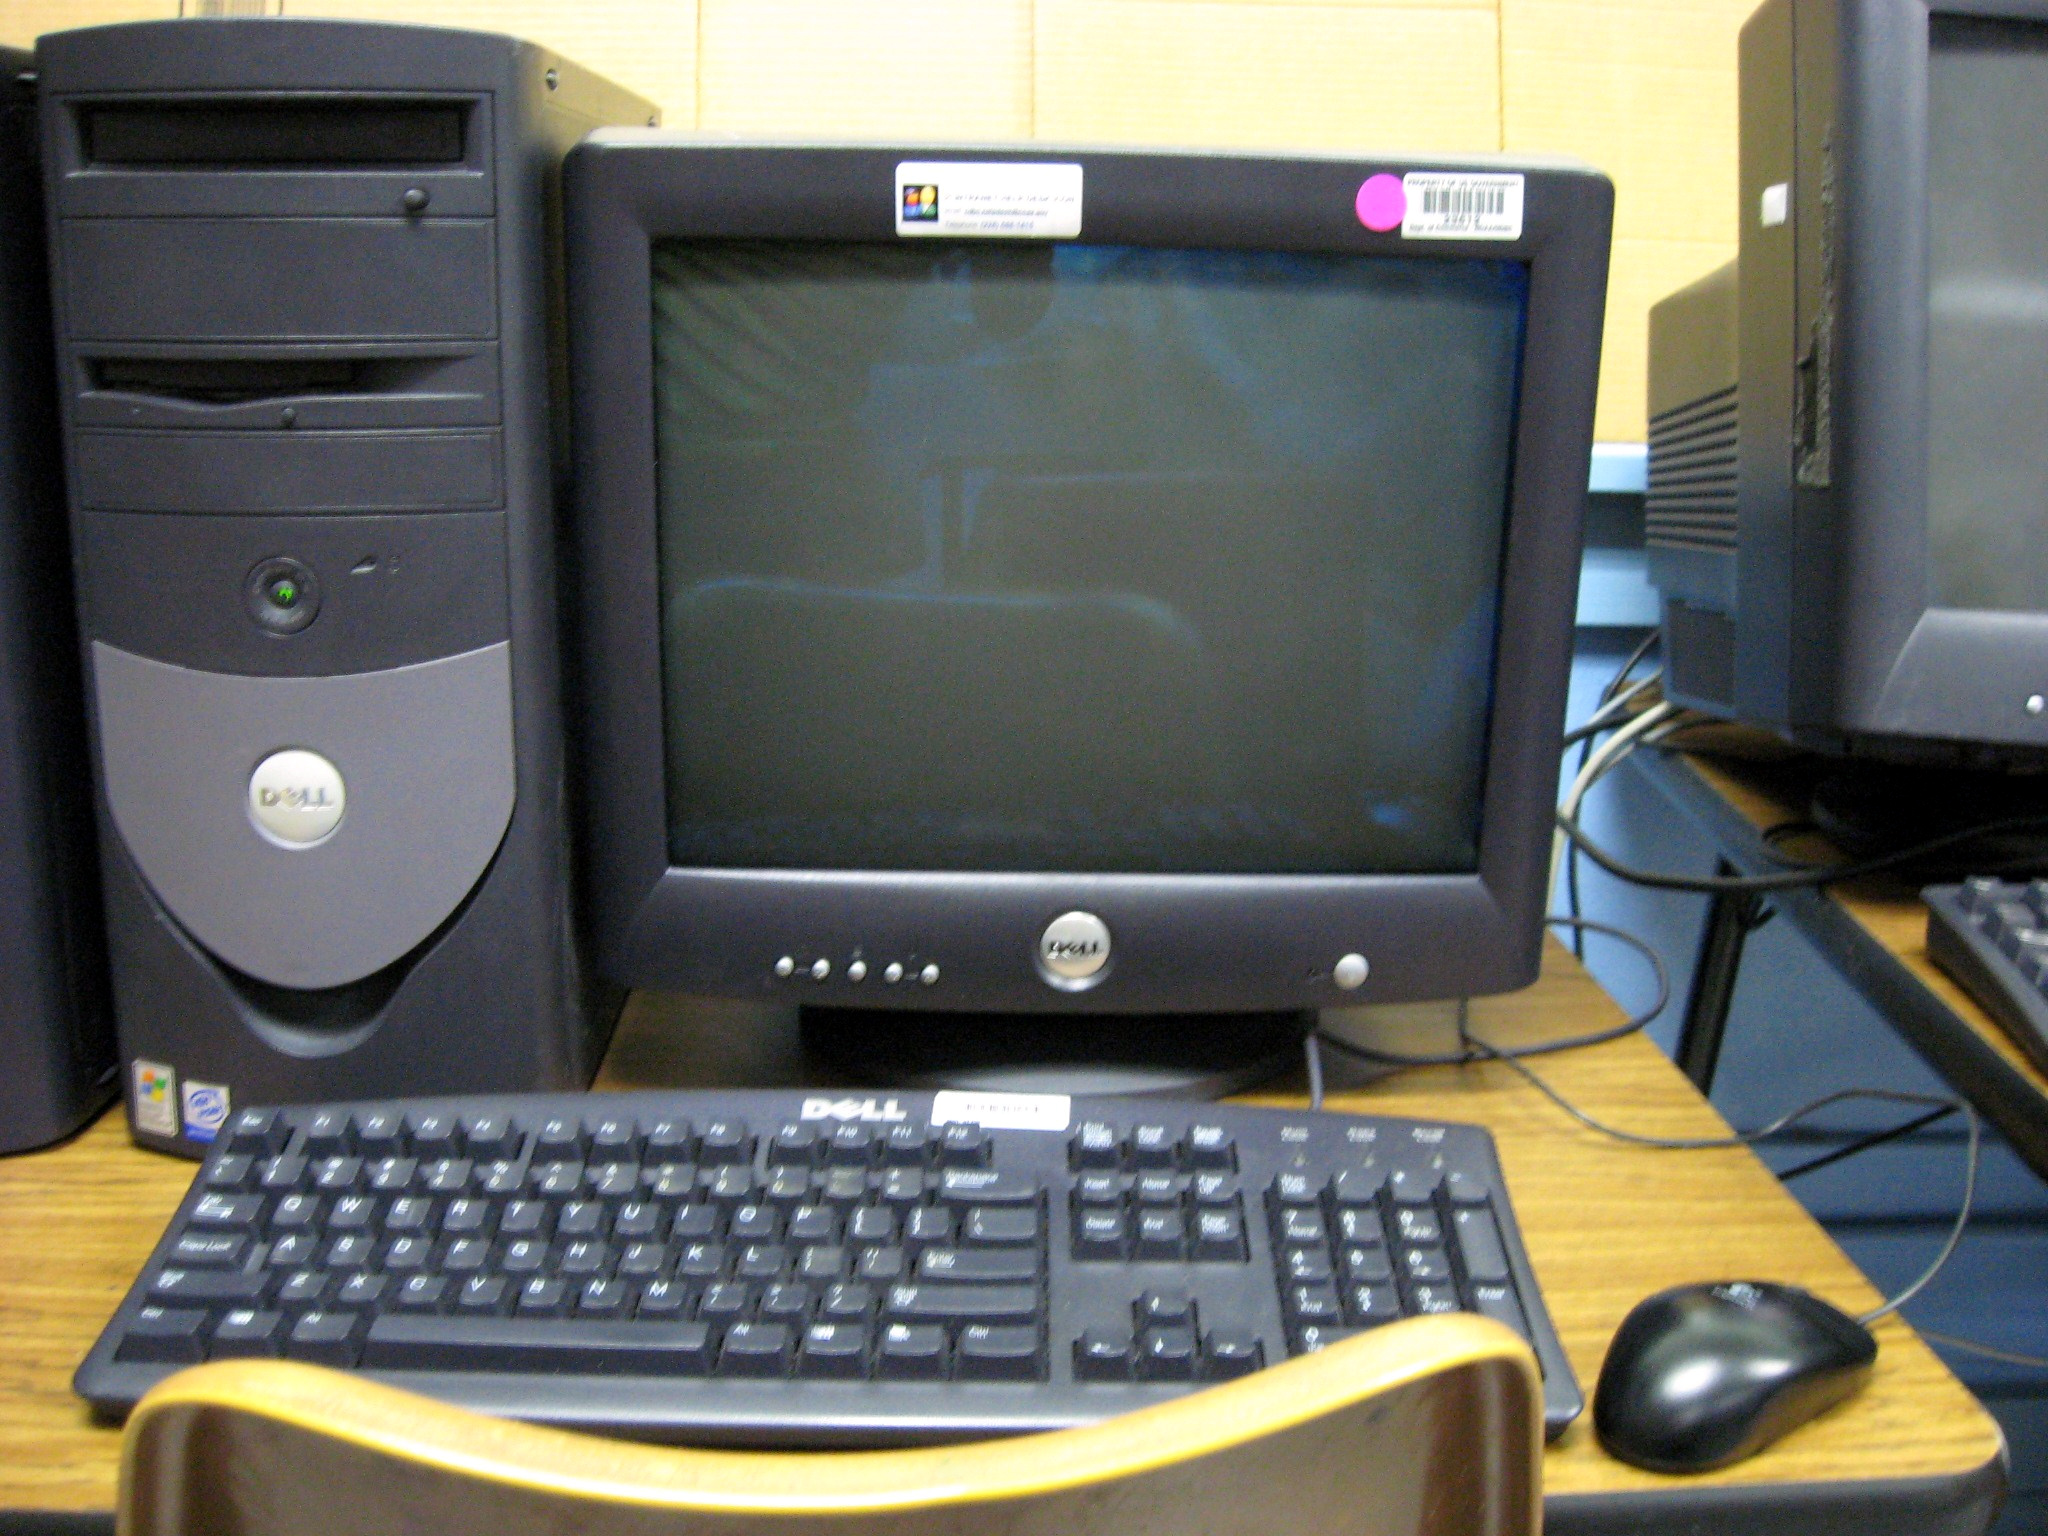 File:Dell Desktop Computer in school classroom.jpg - Wikimedia Commons